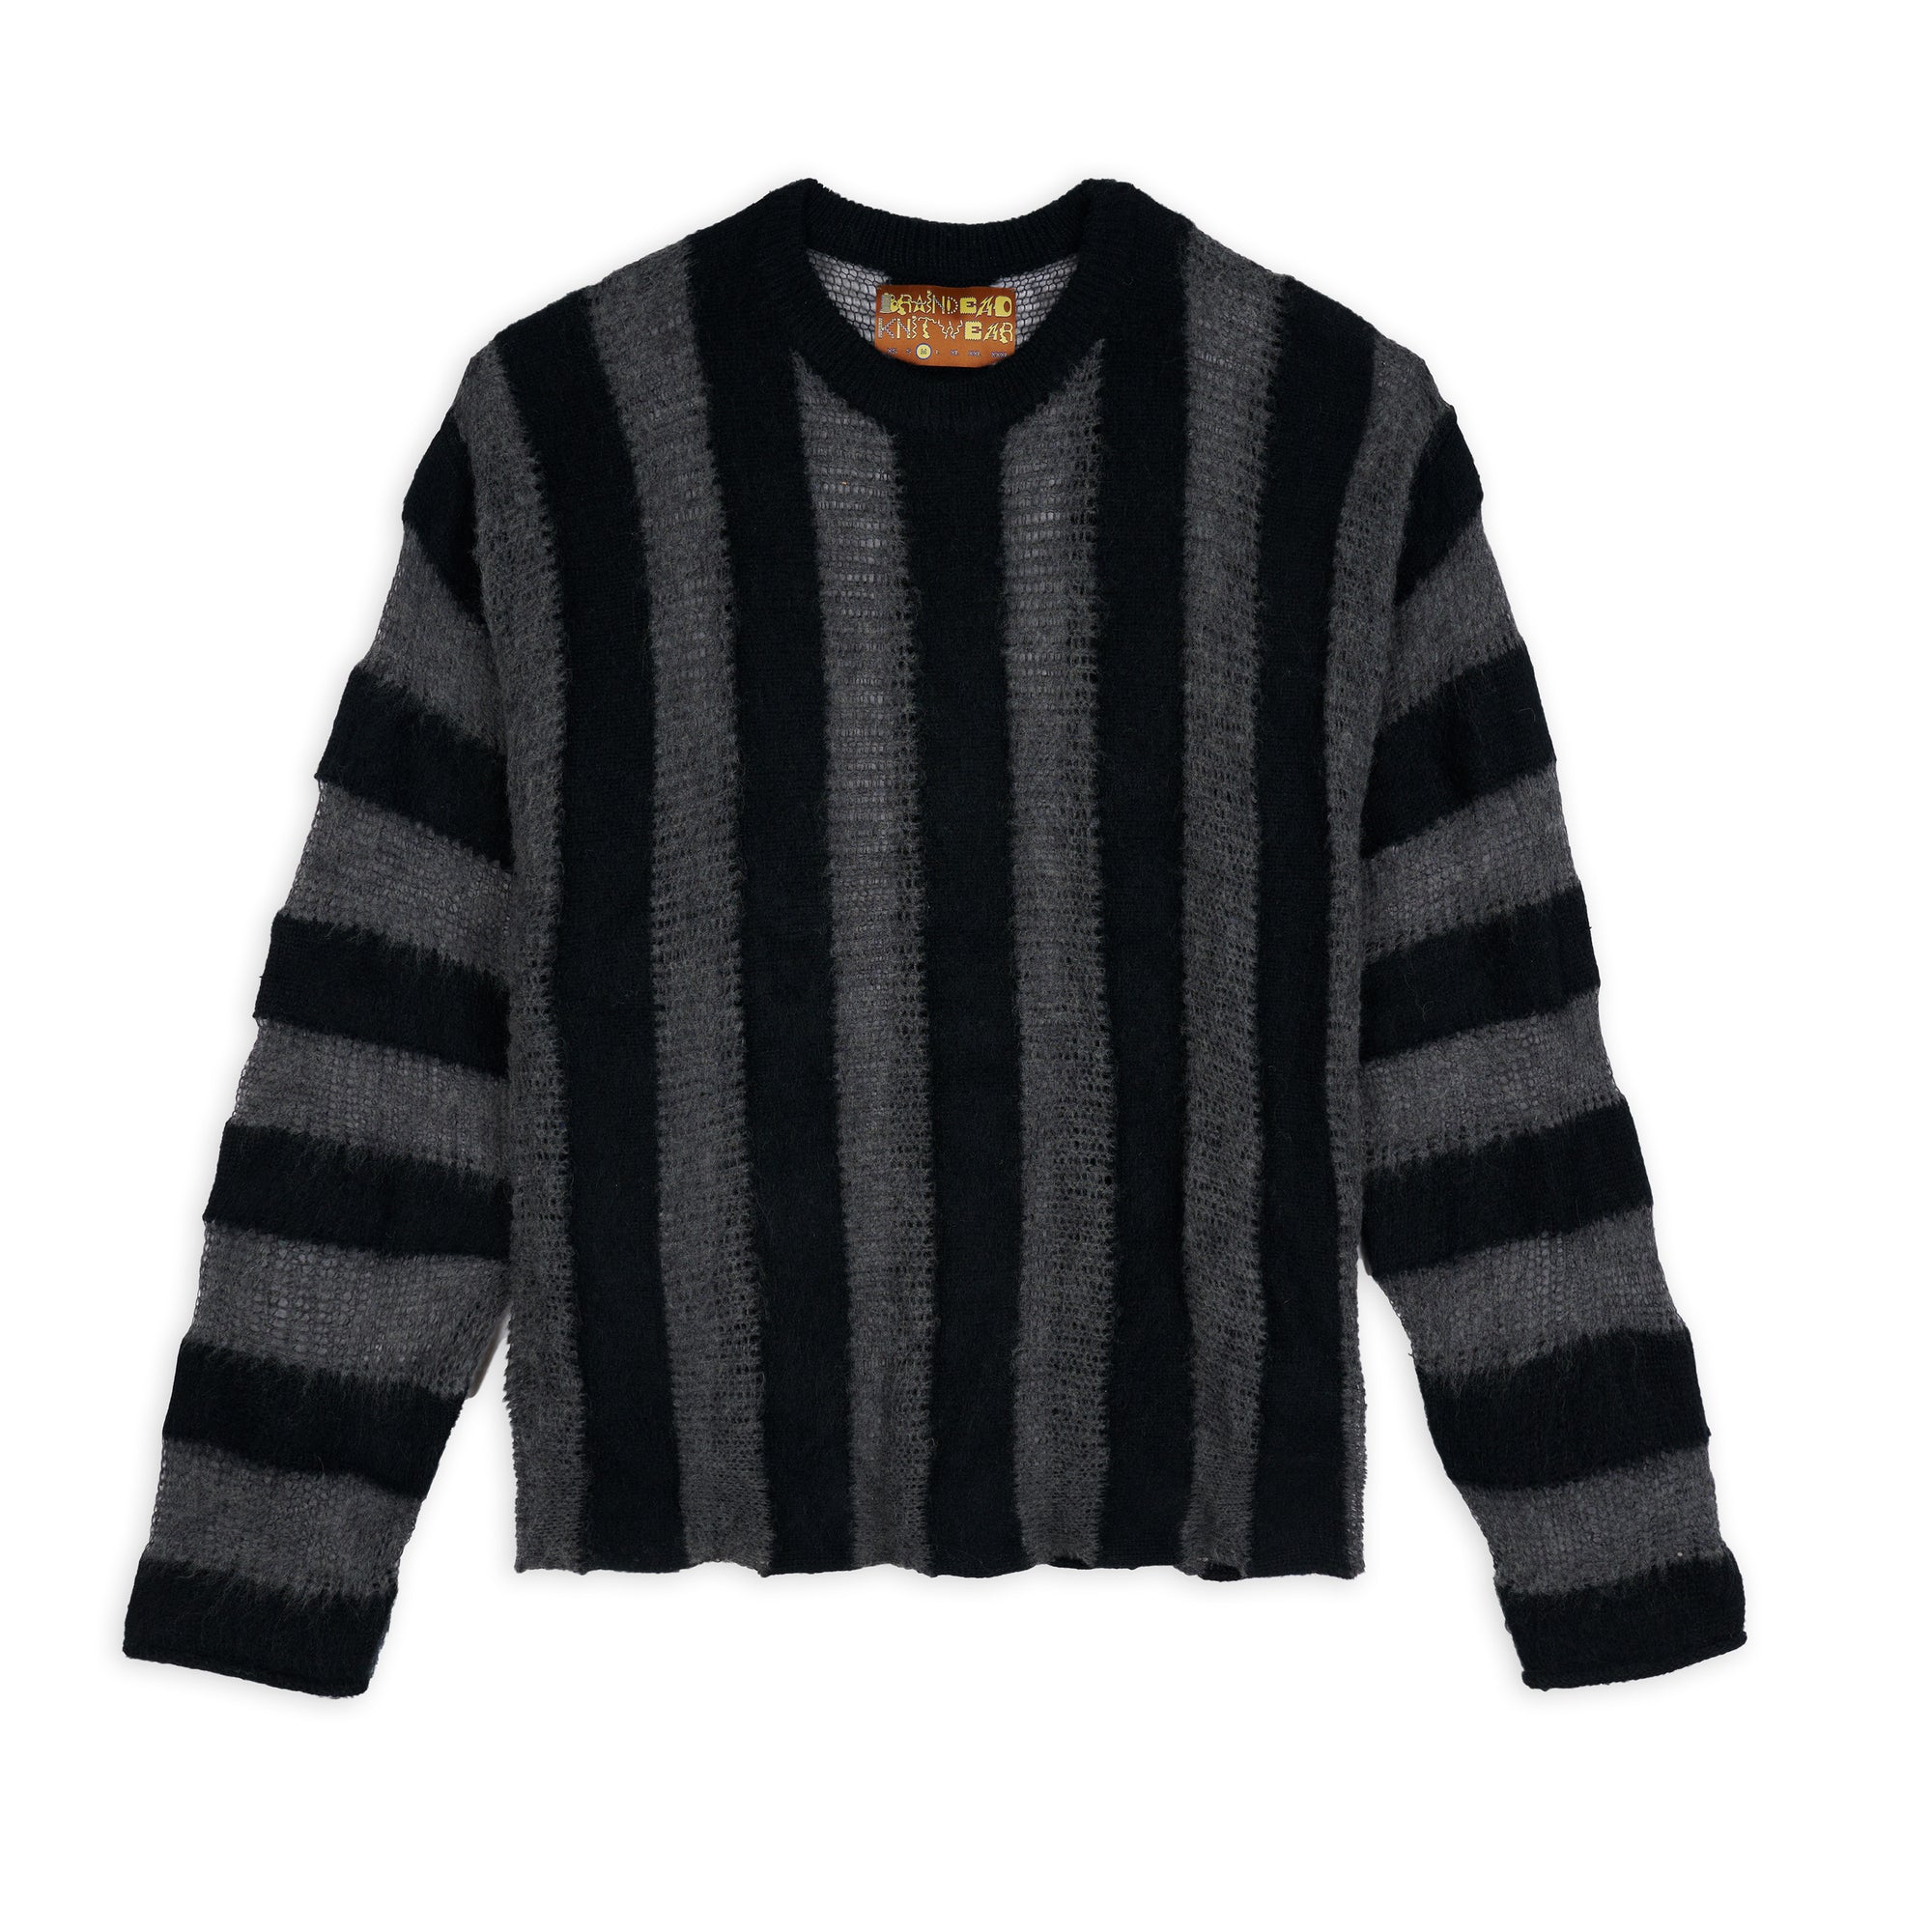 Brain Dead - Men's Fuzzy Threadbare Sweater - (Black) view 1